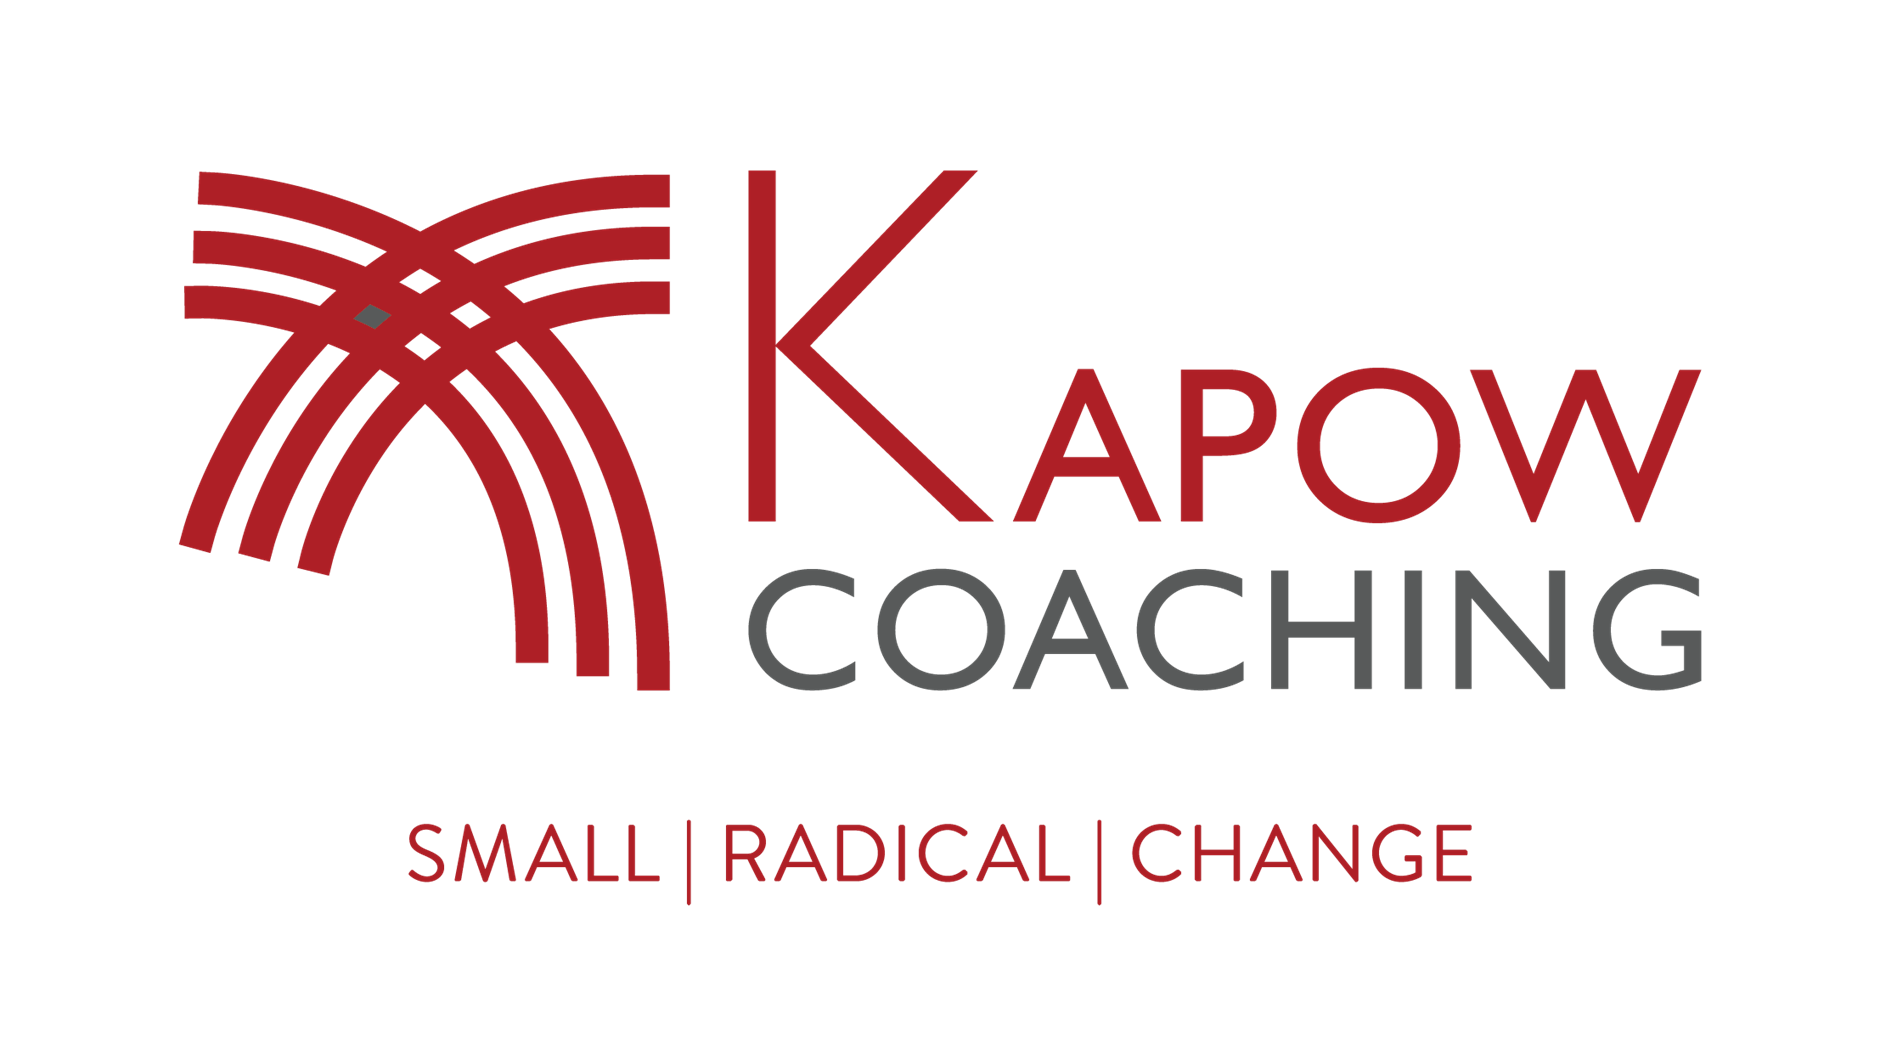 company image for Kapow Coaching